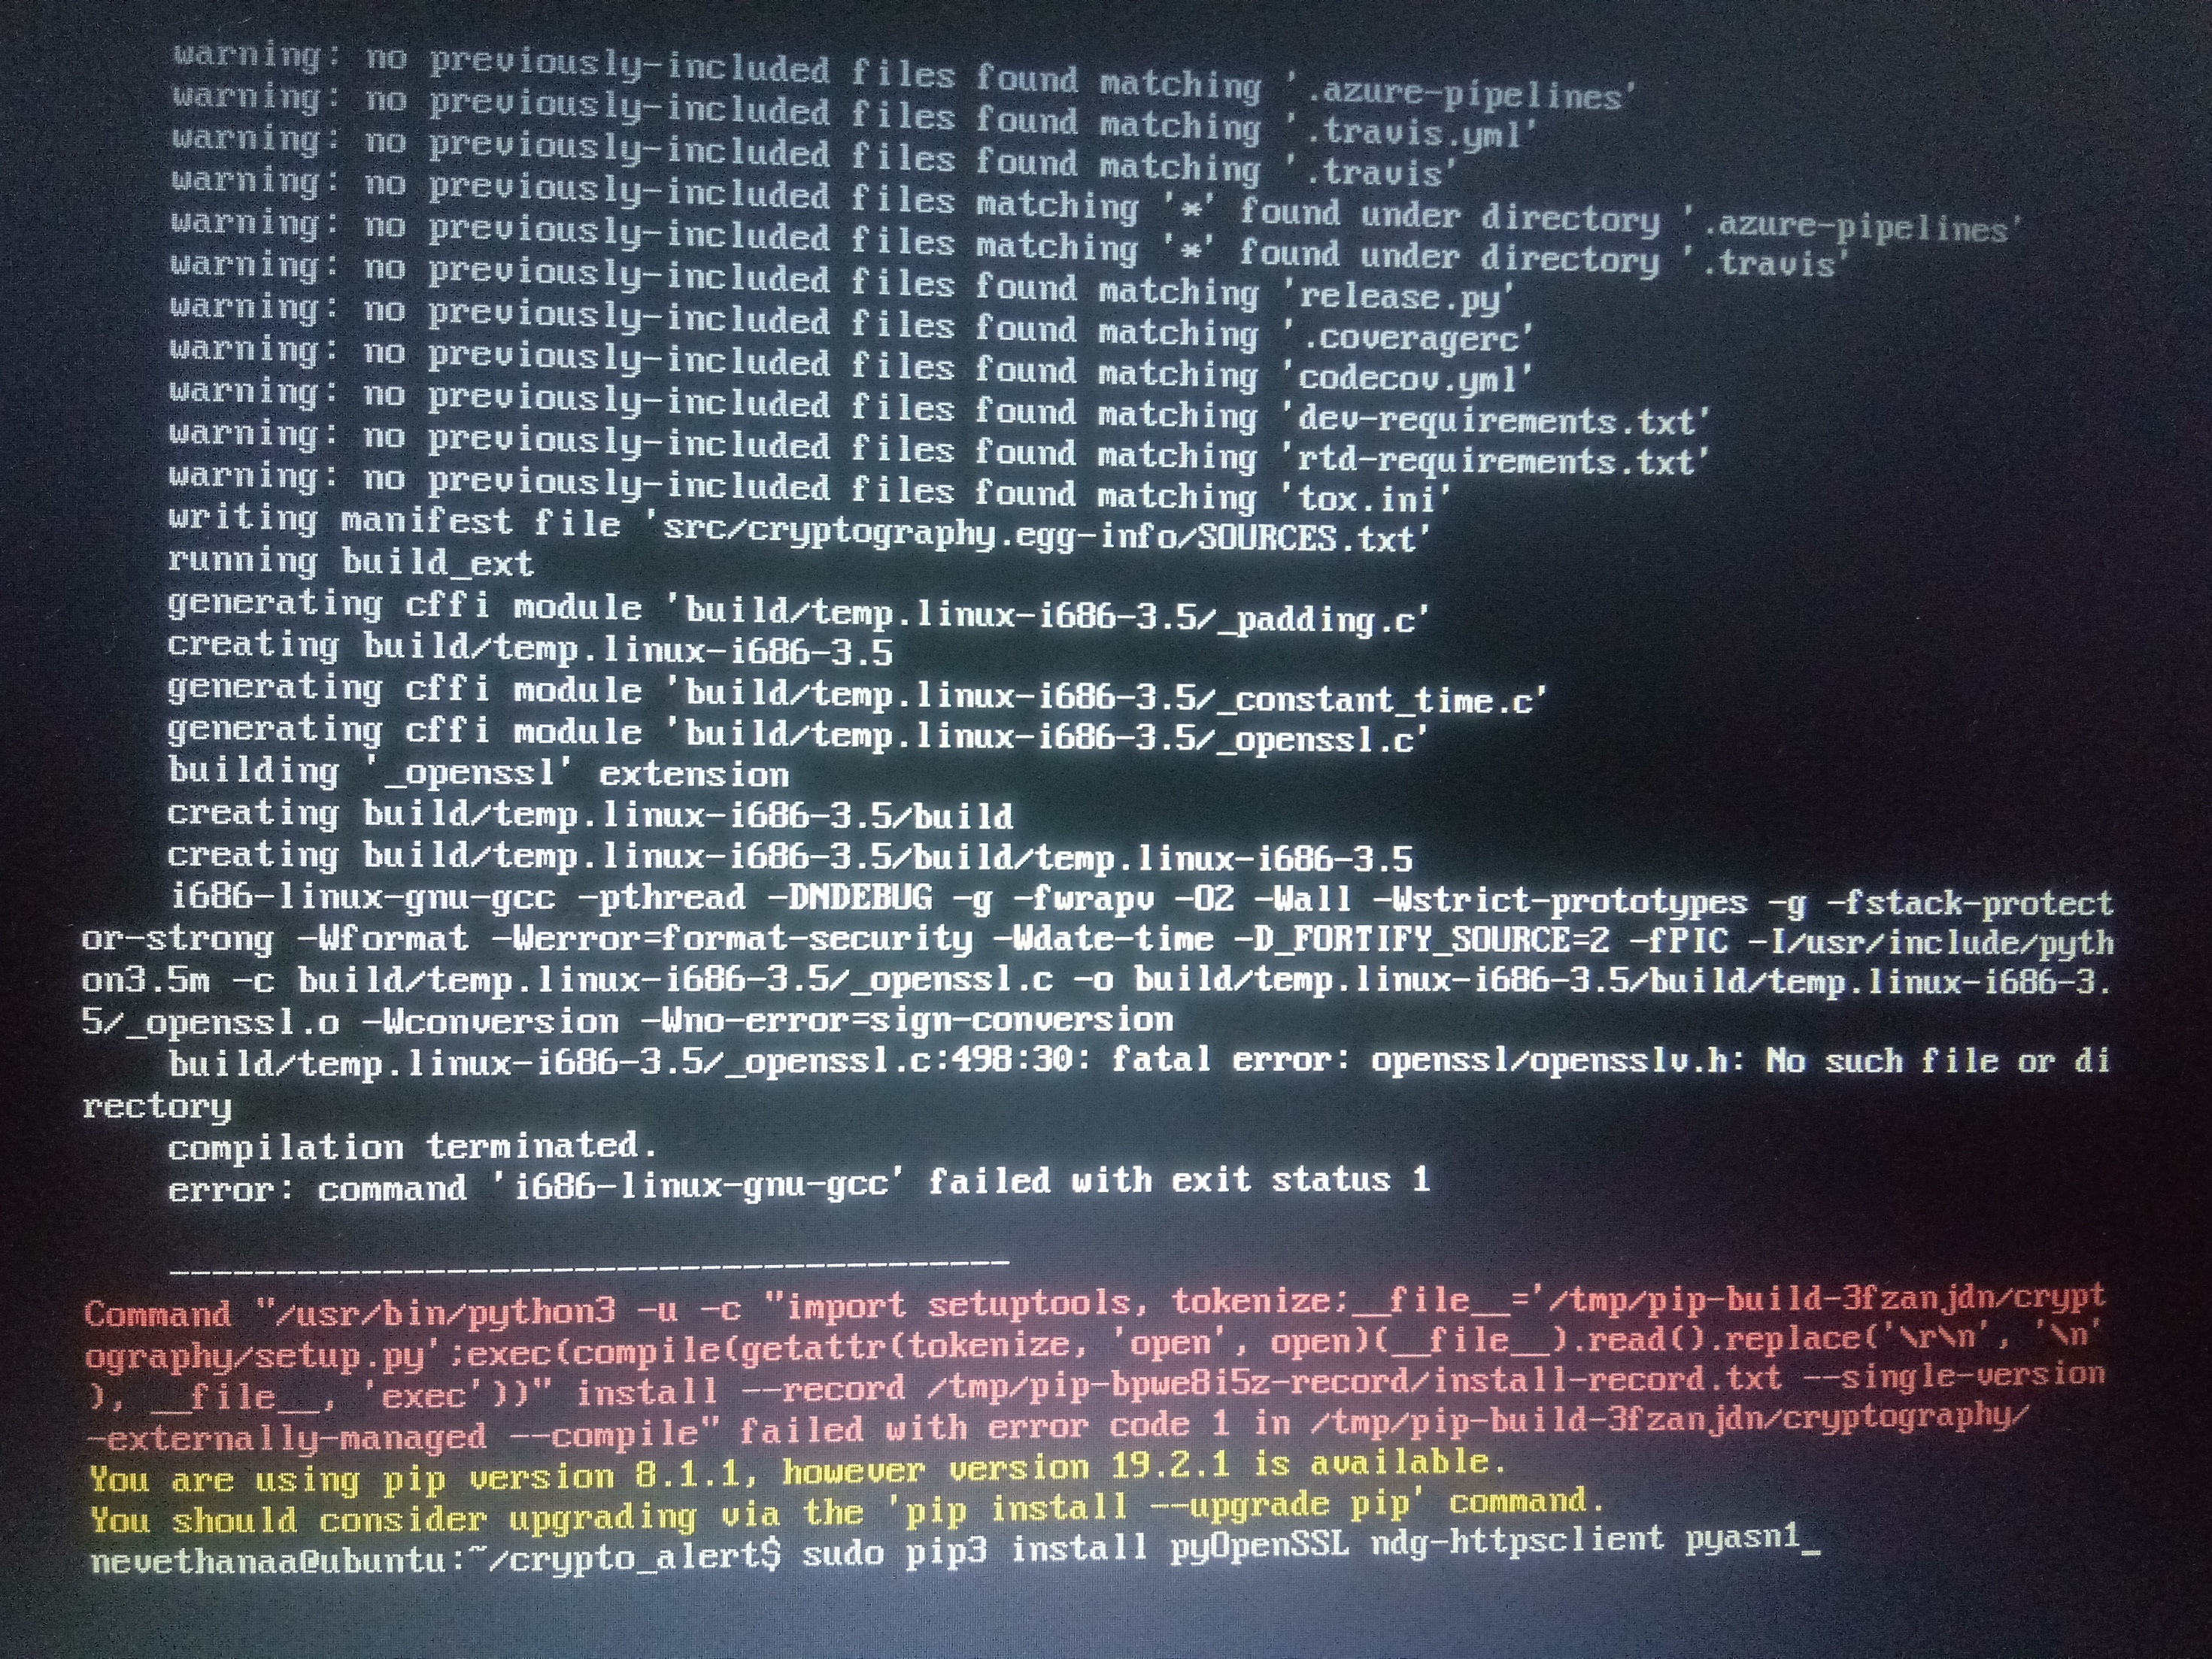 Linux i686 игра. GNU Compiler collection код. GCC конфигурация. Linux Eroc. Error command failed with exit code 1